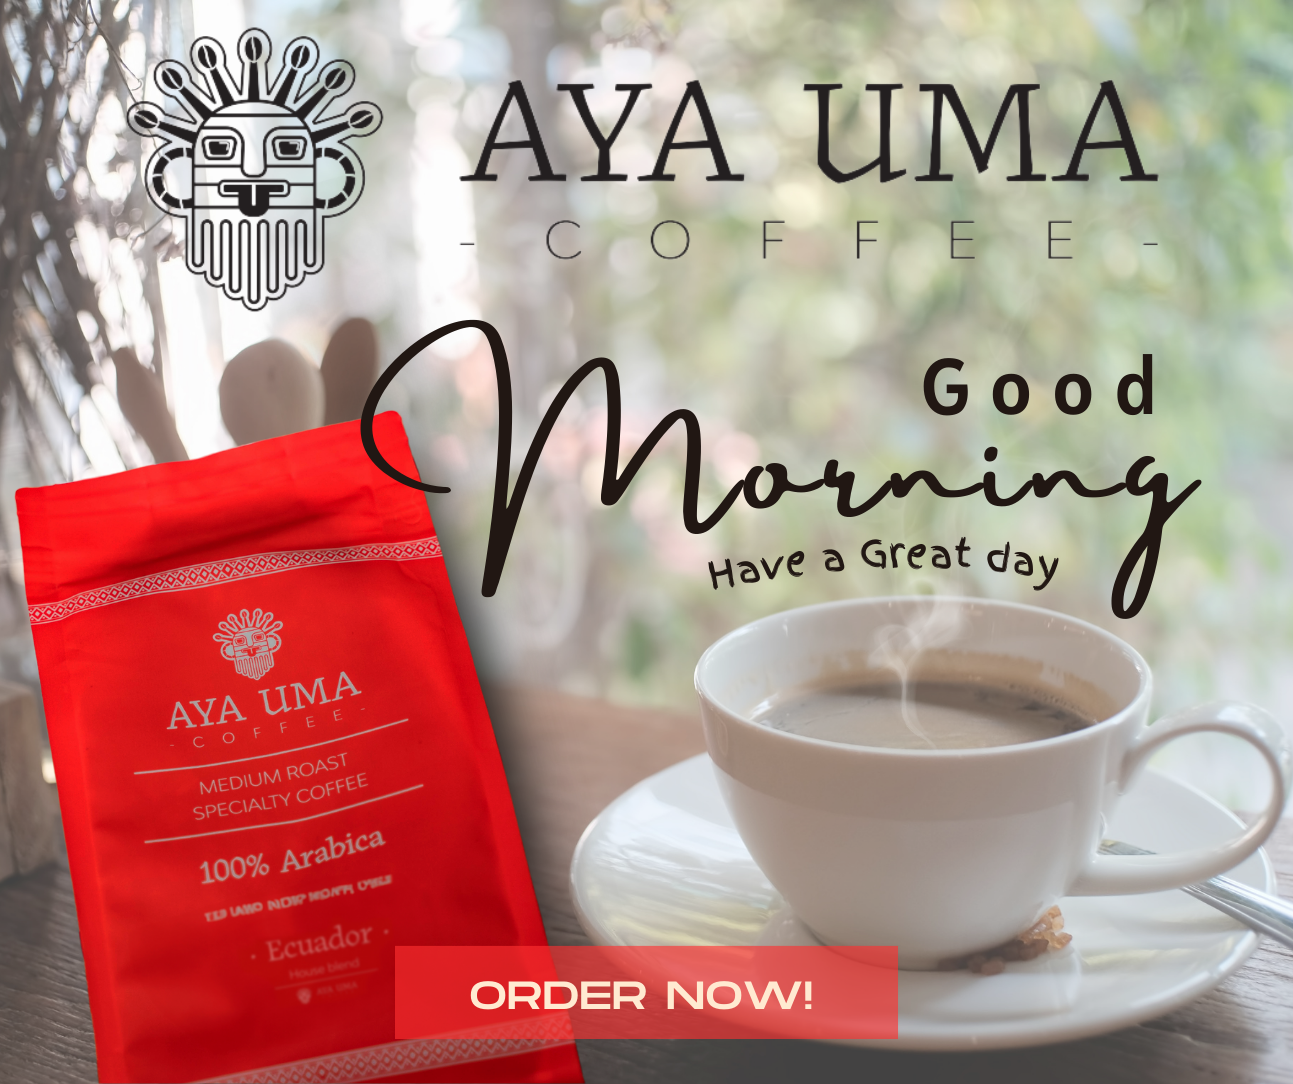 Ayauma coffee